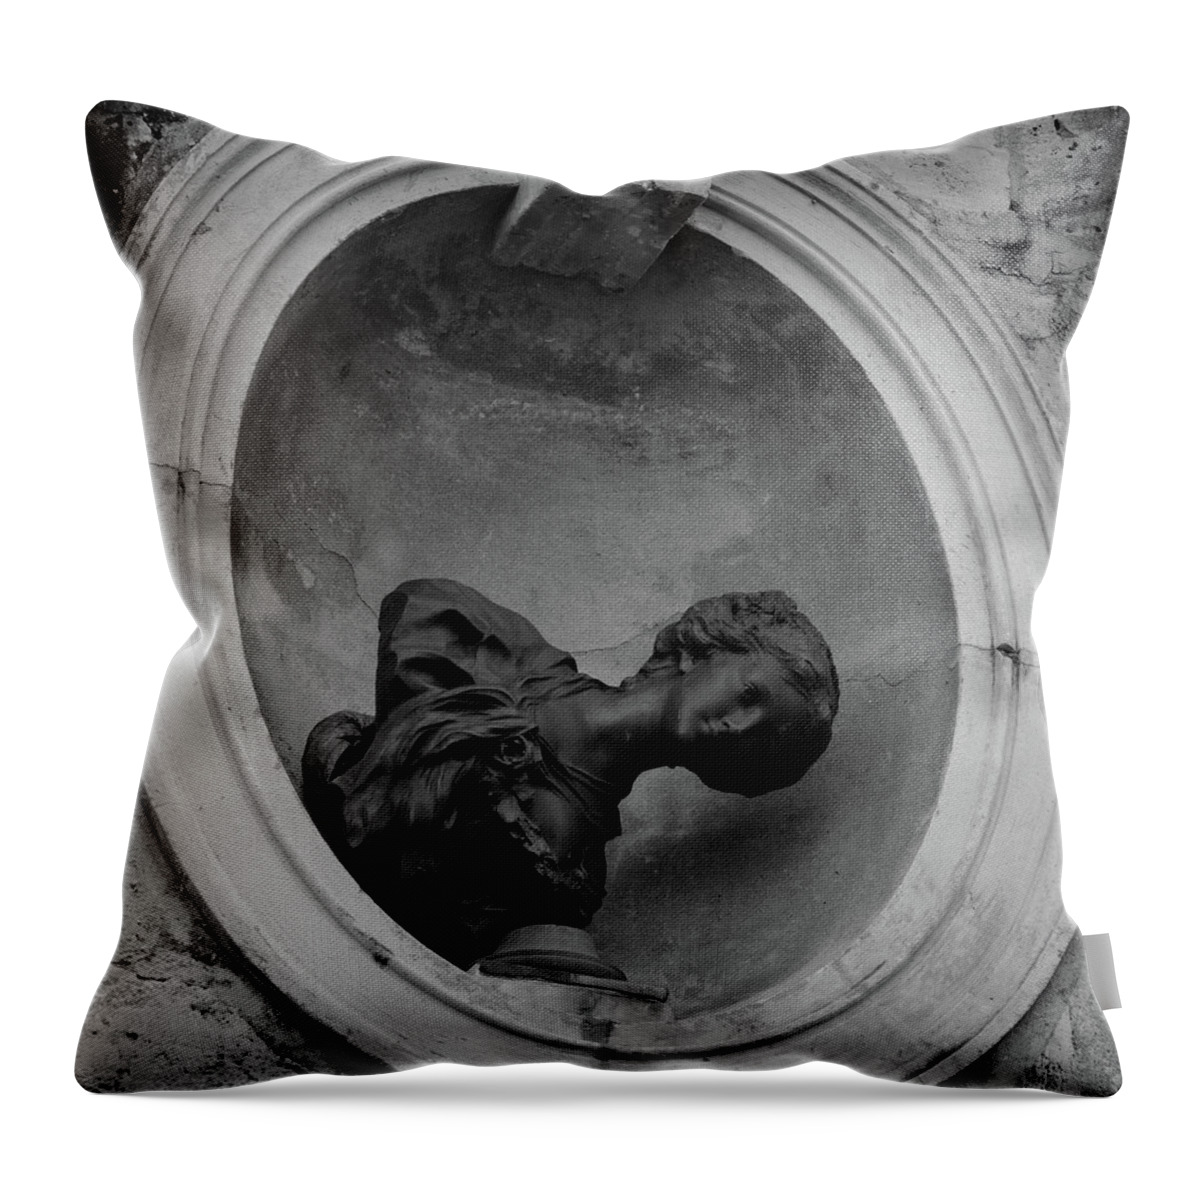 Atlantis Throw Pillow featuring the photograph Fallen Goddess by Jeff Phillippi